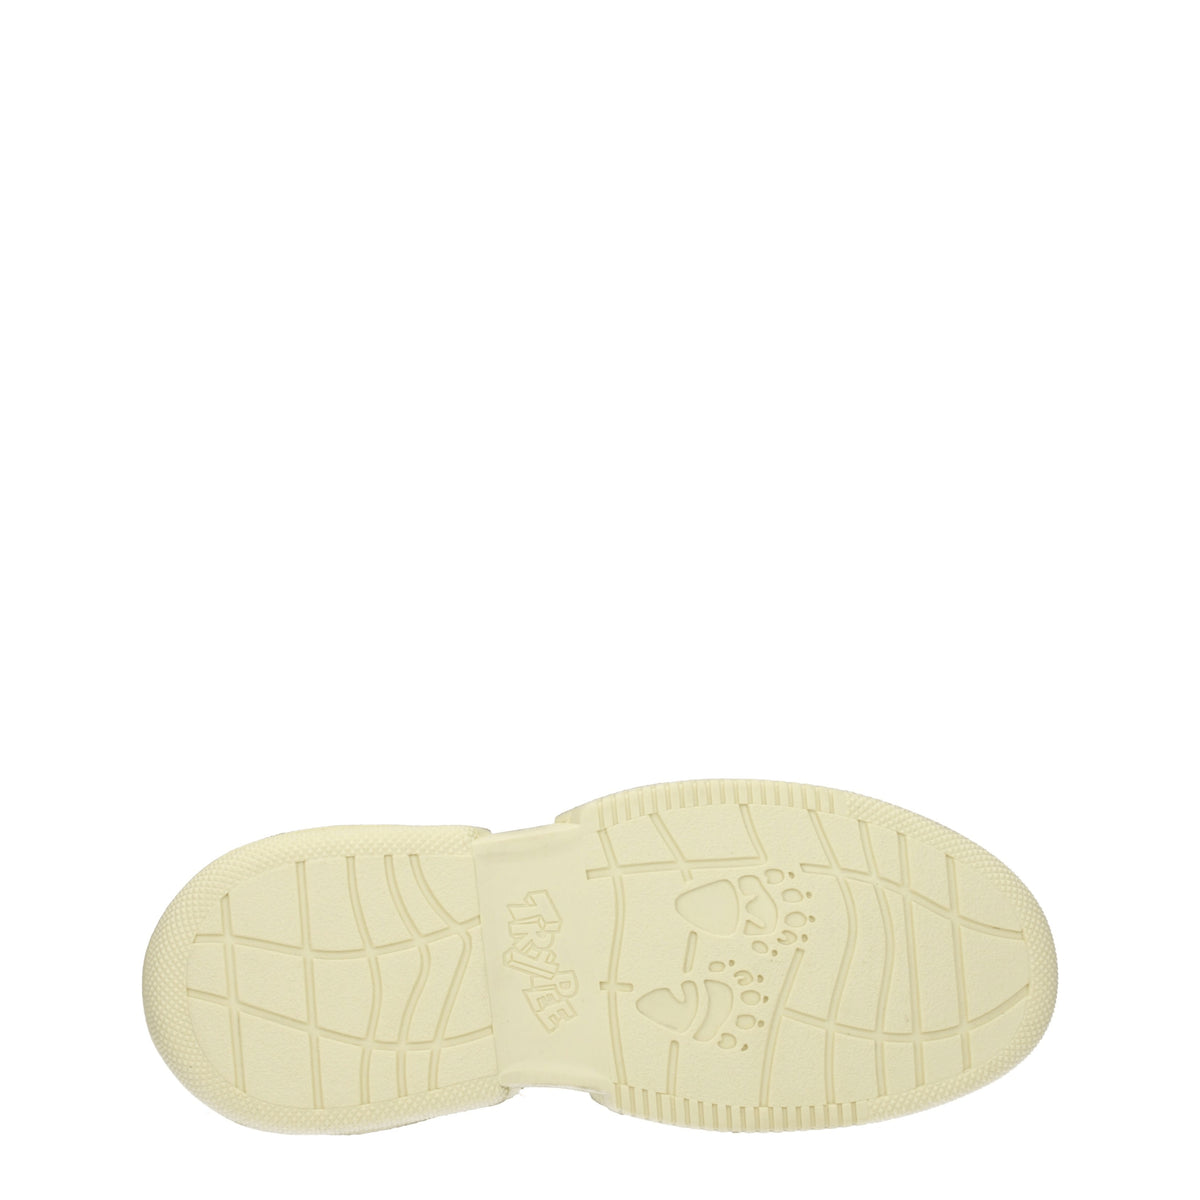 Trypee Sneakers Uomo Pelle Bianco Crema